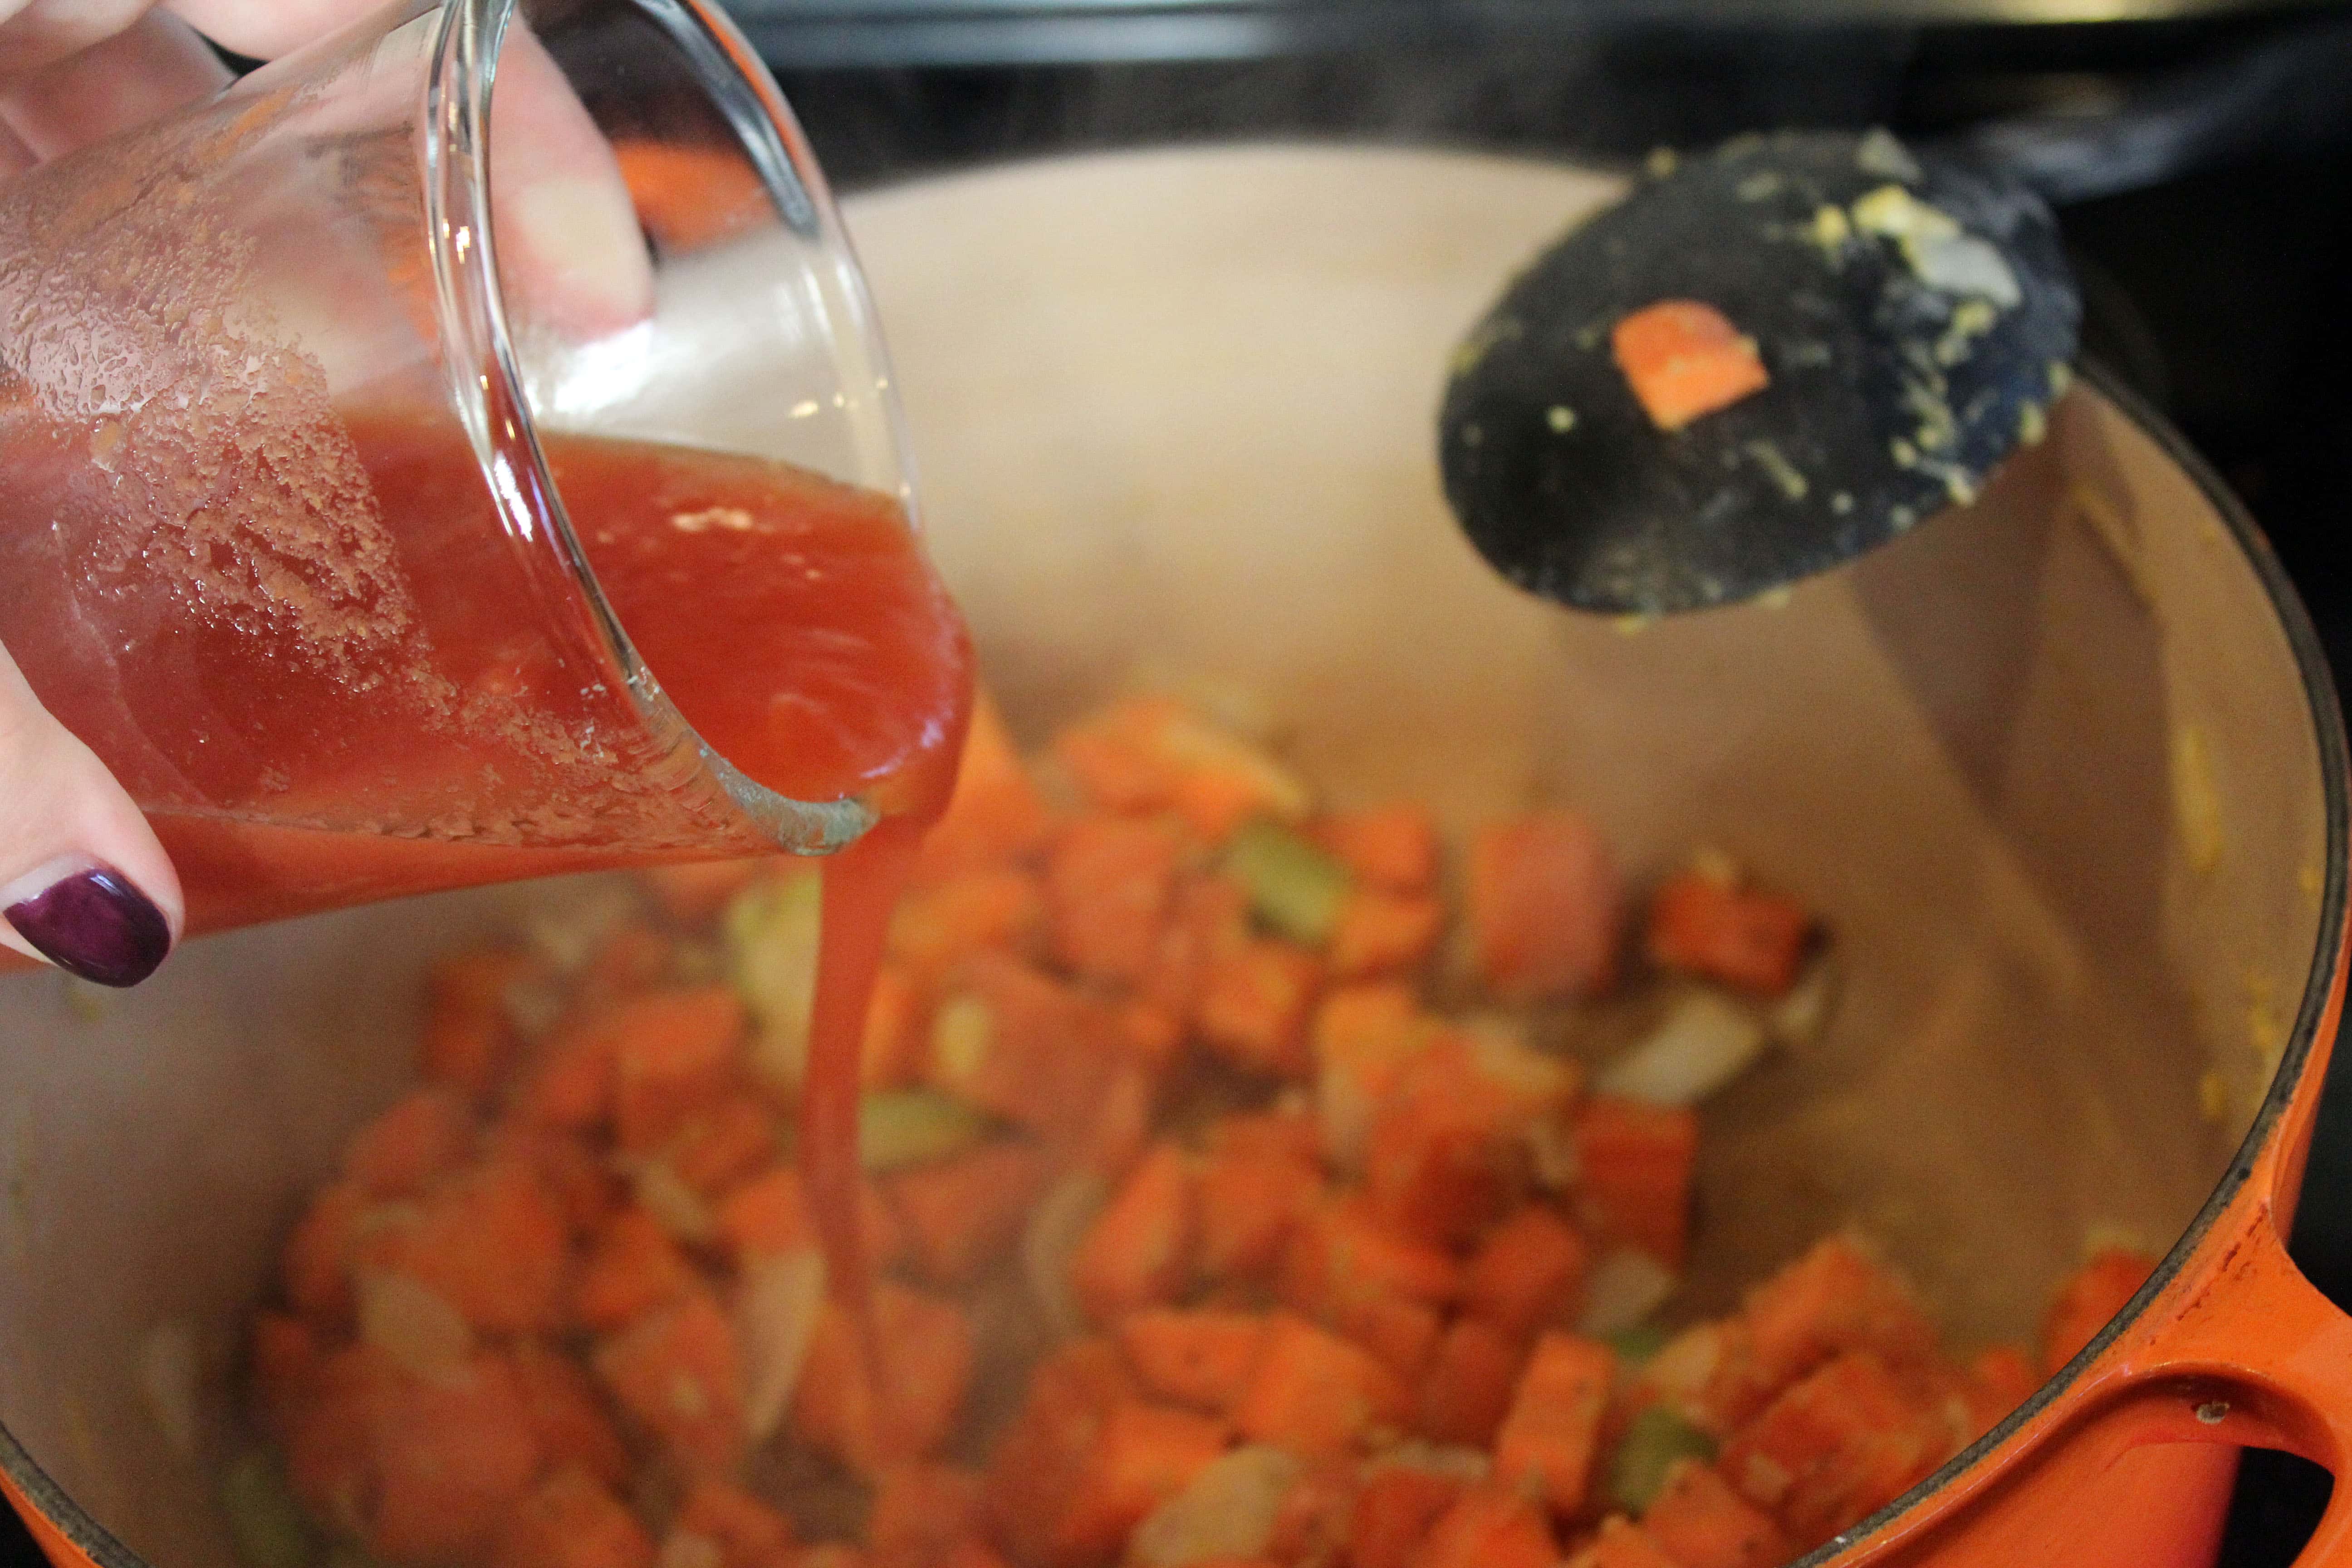 Add tomato juice to floured tomatoes